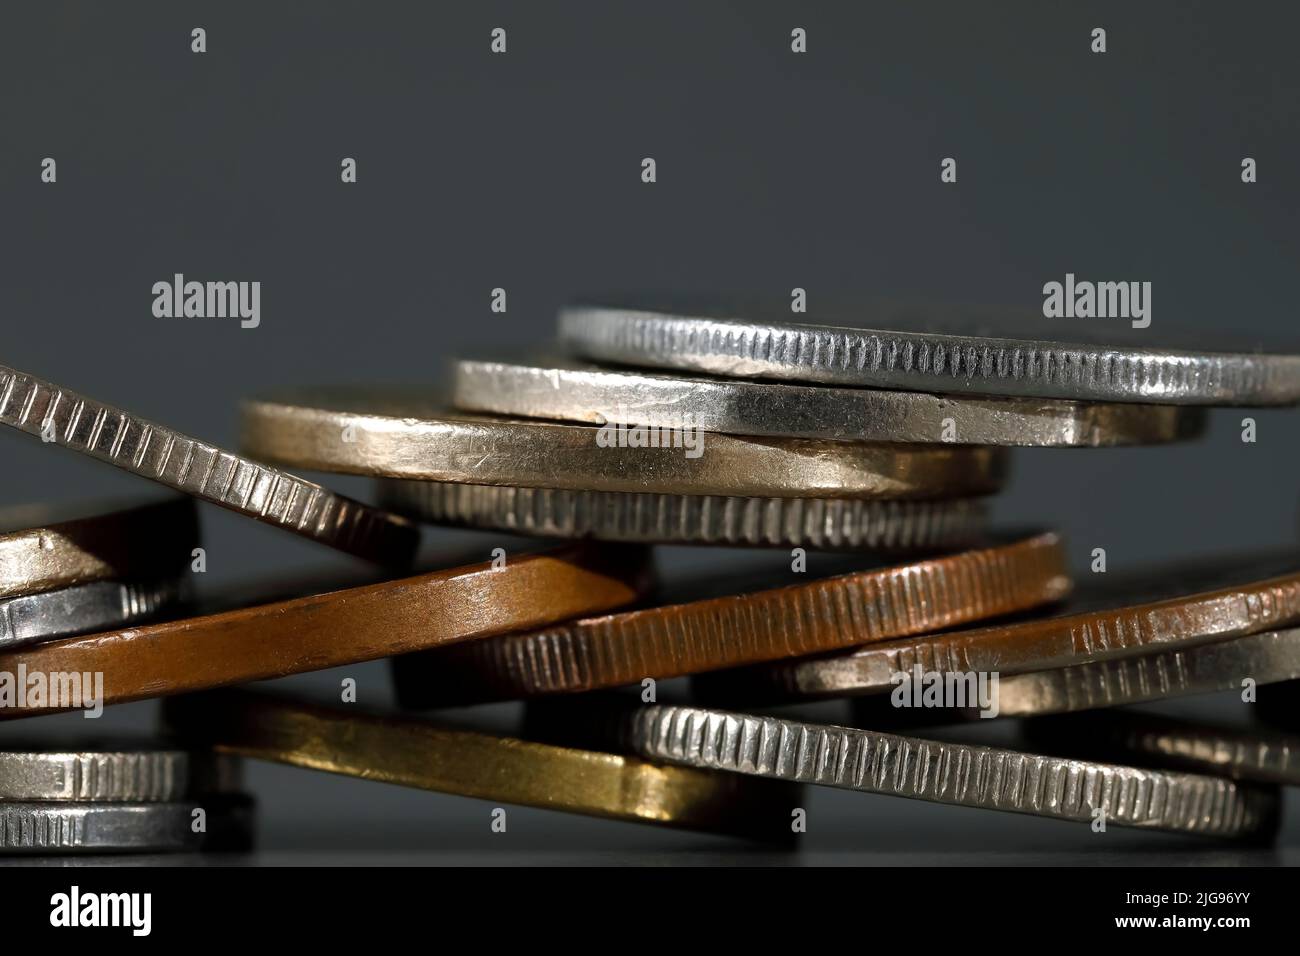 Se trata de monedas diferentes dispuestas sobre fondo gris. Foto de stock